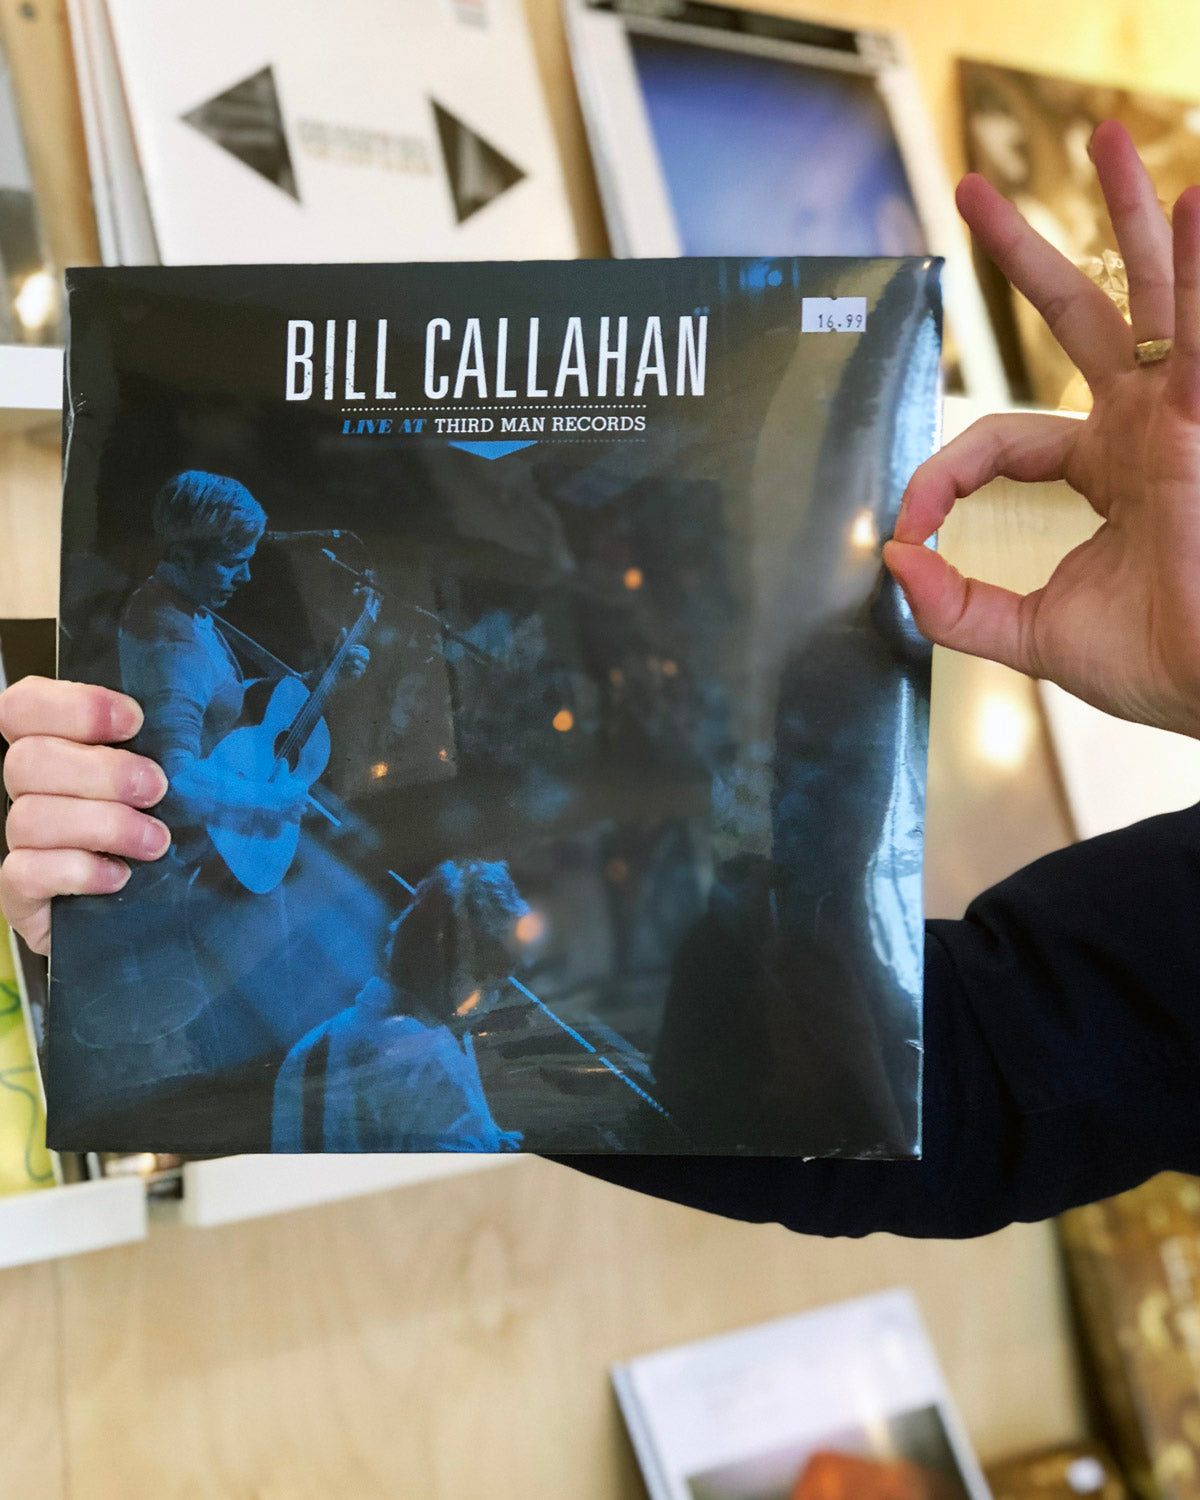 ROTW: Bill Callahan, The 1975, Farai, Jeff Tweedy, plus more Kate Bush reissues and David Bowie live at Glastonbury.